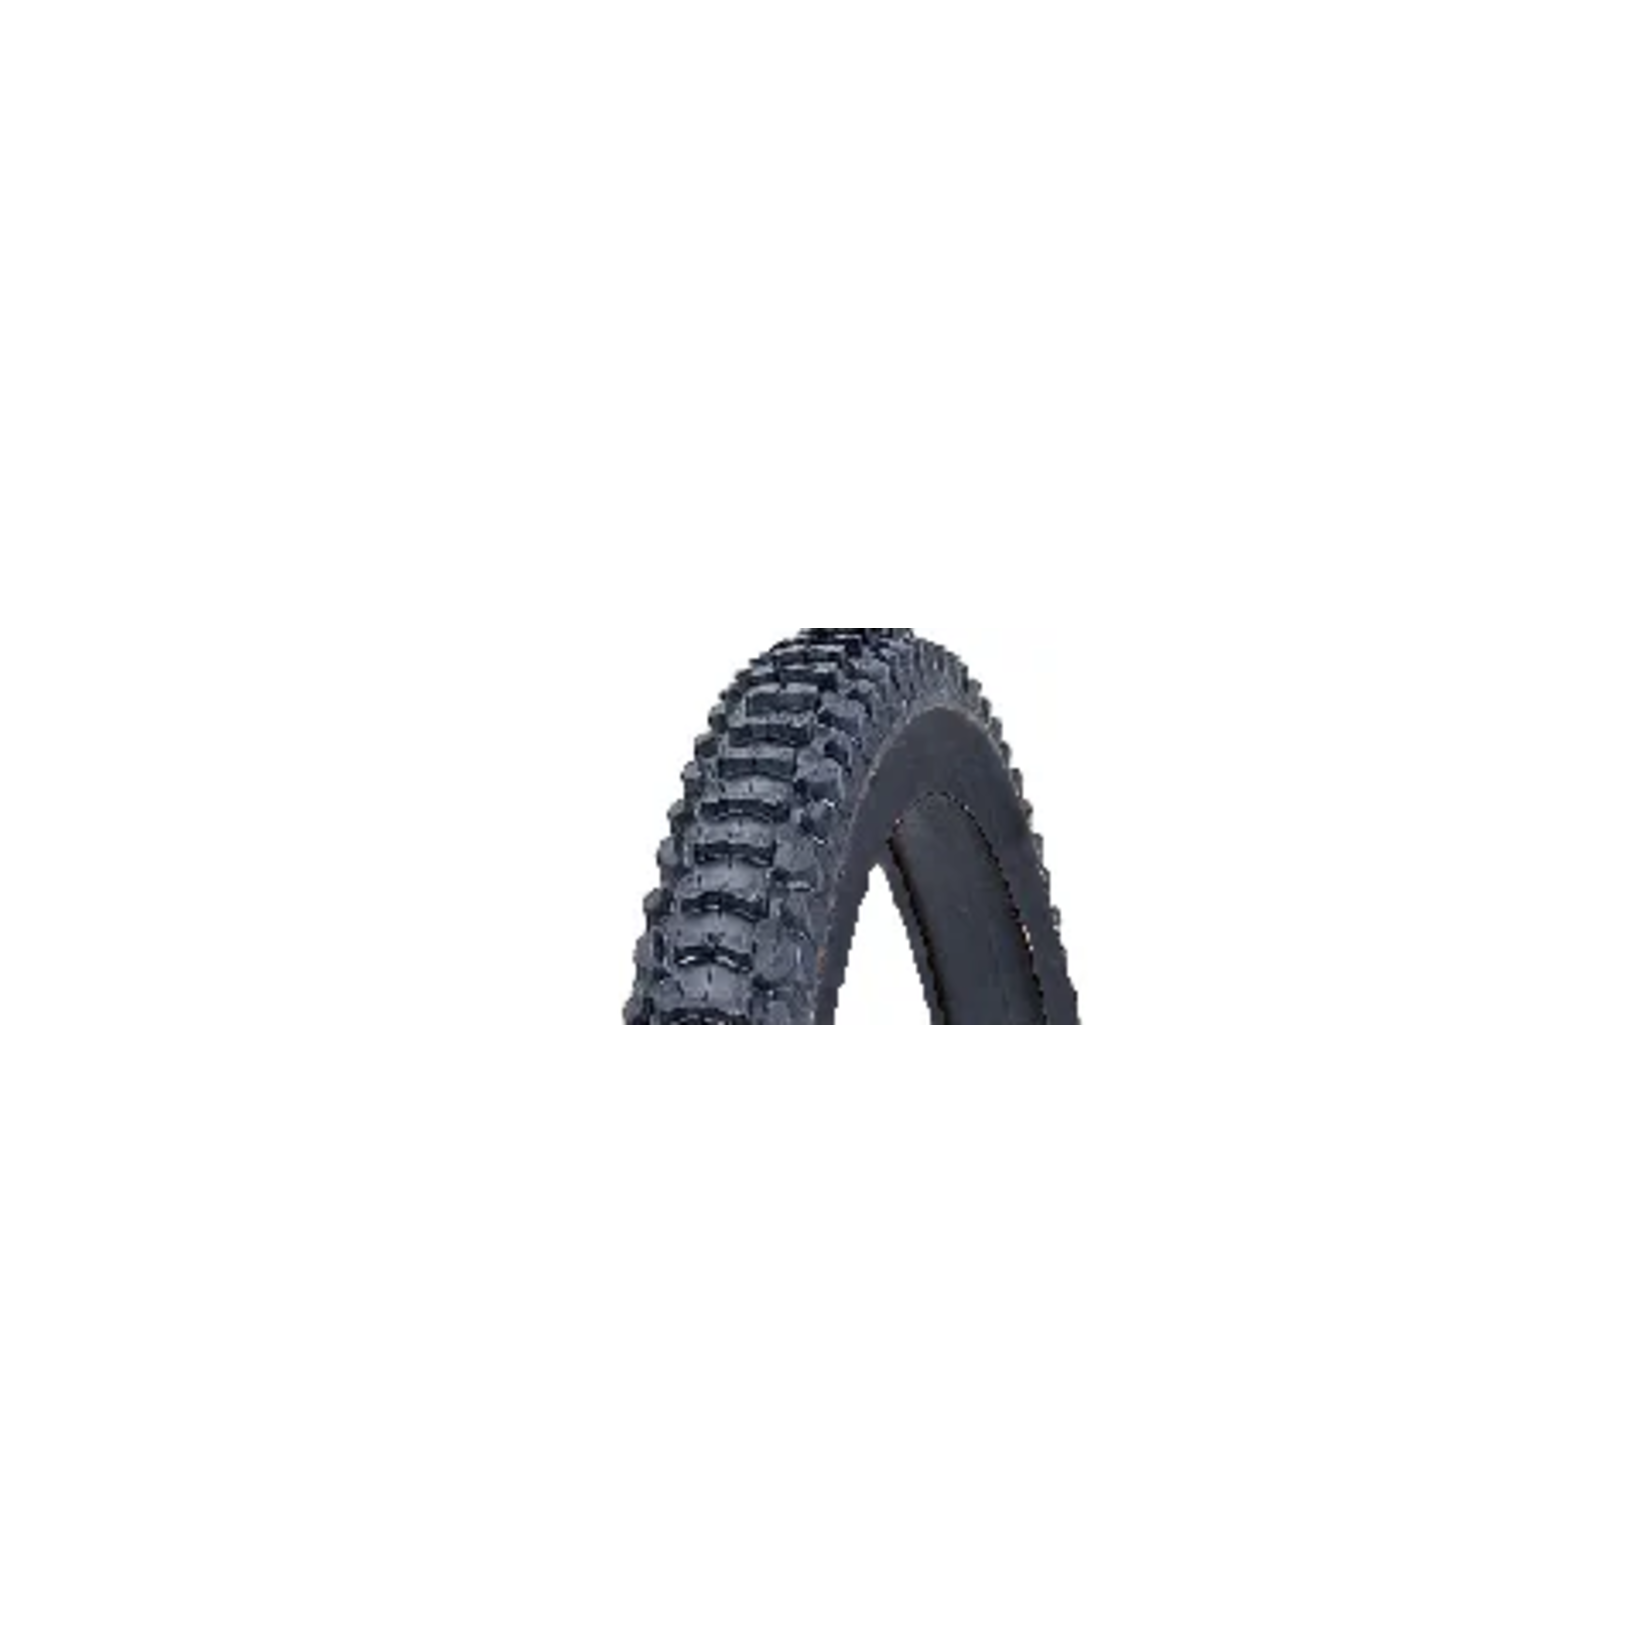 Duro Duro Bicycle Tyre - 26 X 2.10 - Black MTB - Pair